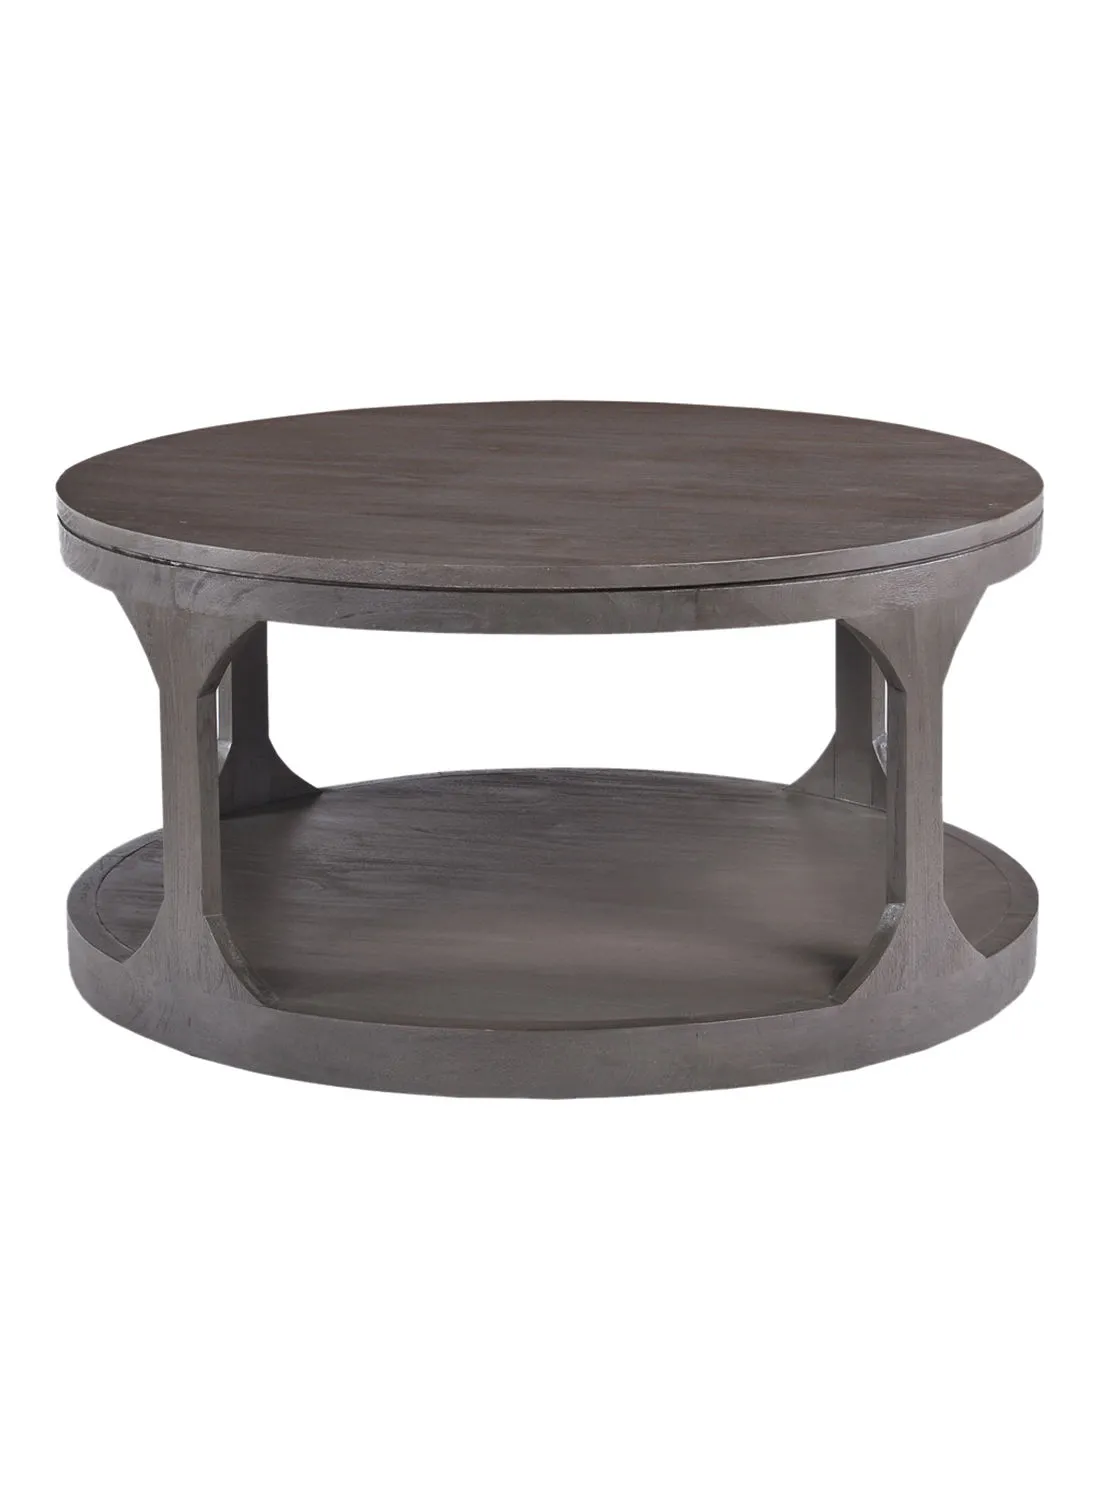 ebb & flow Side Table Luxurious - In Dark Brown Wood - Used Next To Sofa As Coffee Corner